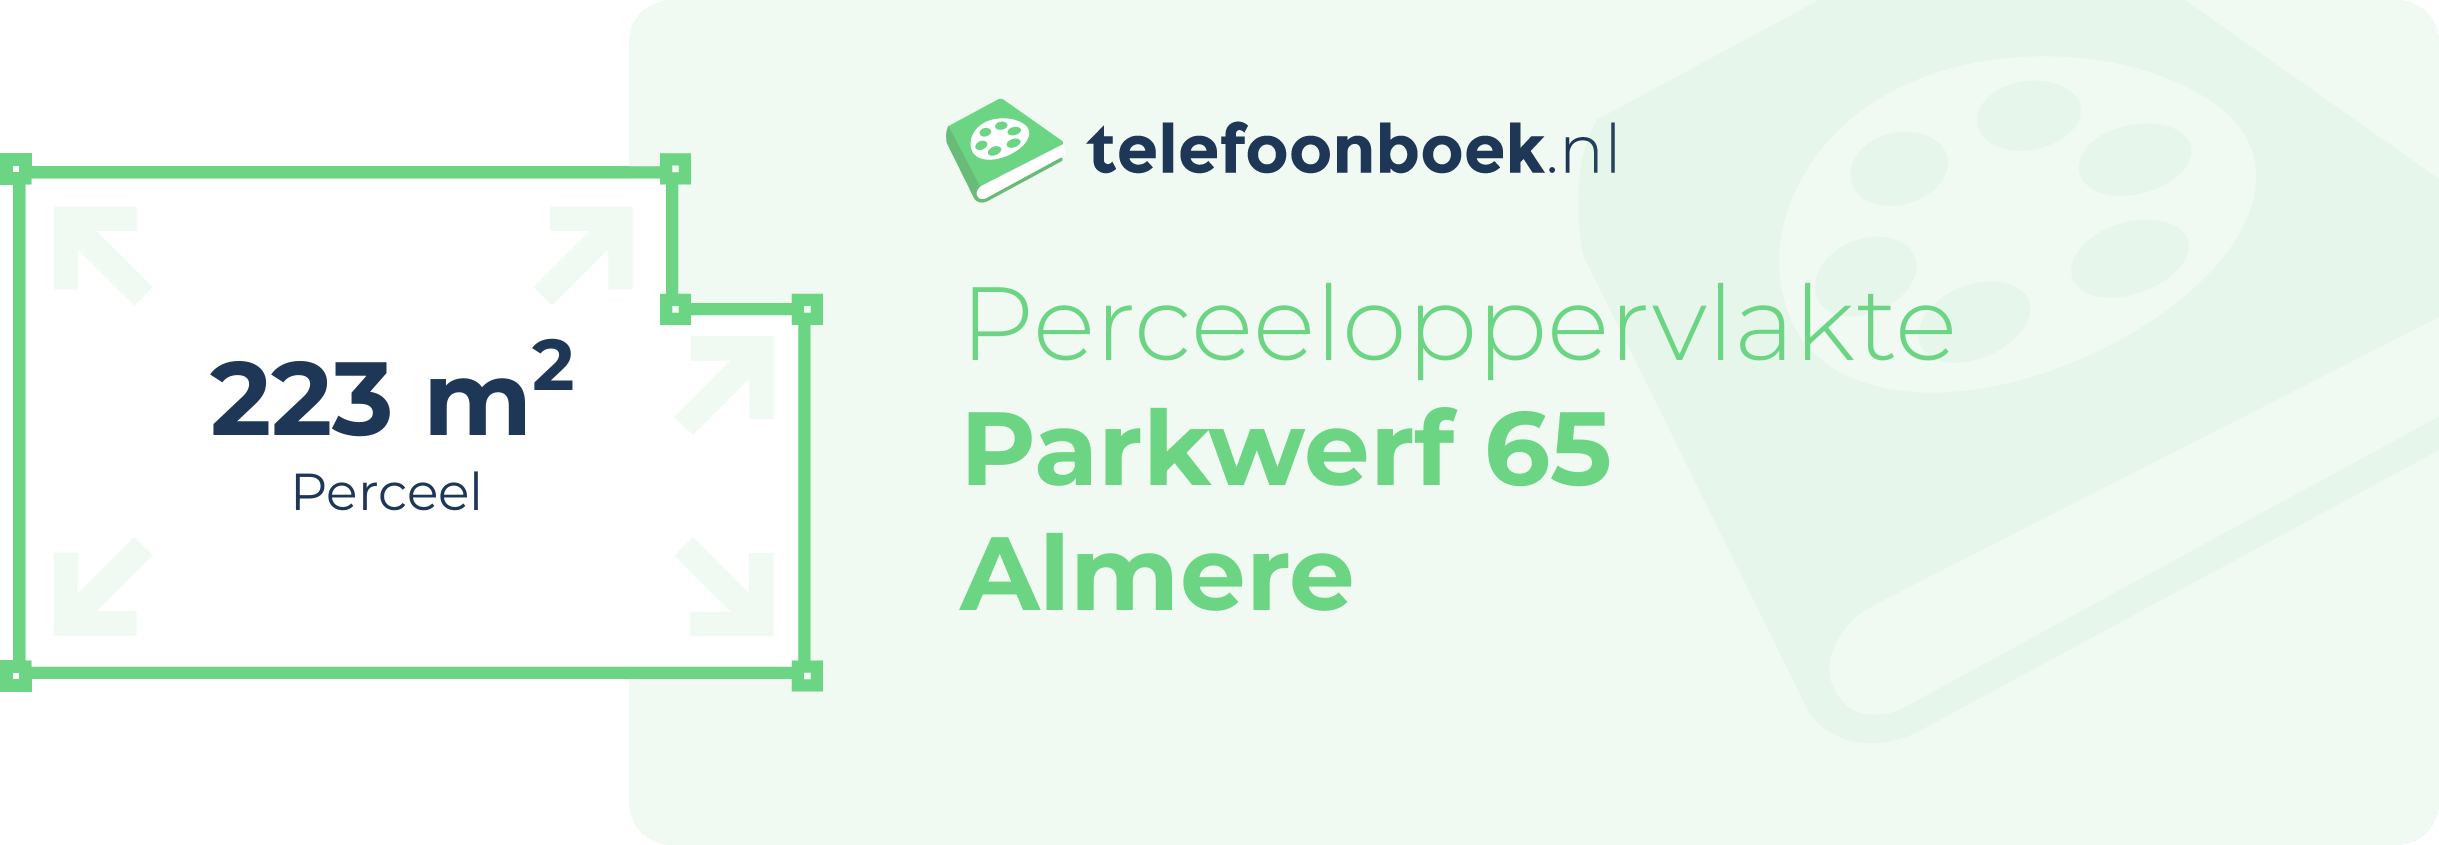 Perceeloppervlakte Parkwerf 65 Almere